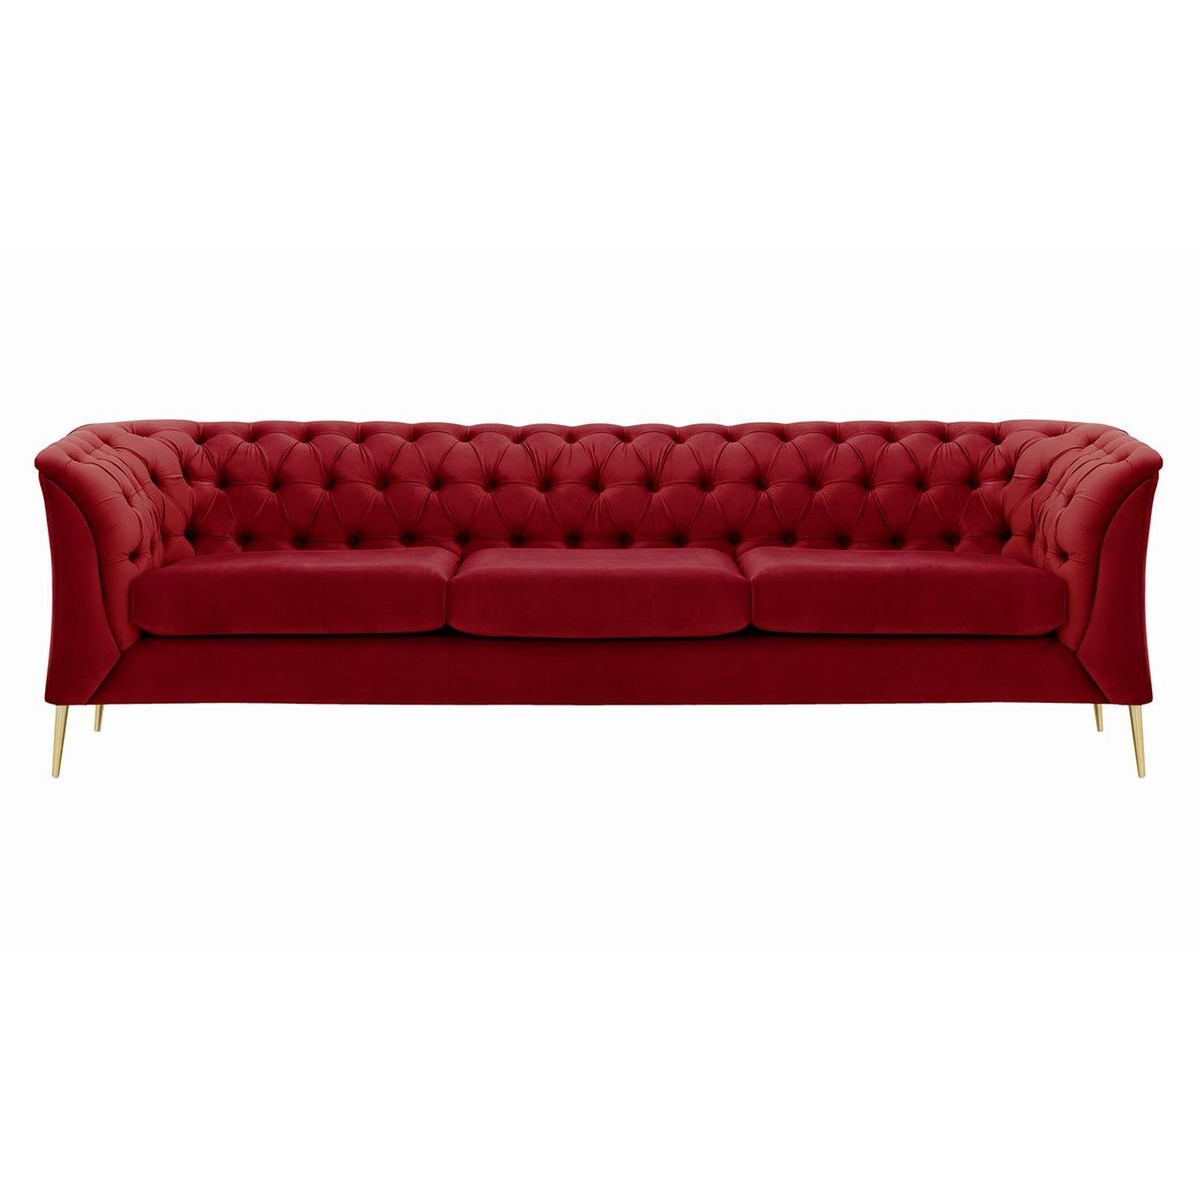 Chesterfield Modern 3 Seater Sofa, dark red, Leg colour: gold metal - image 1